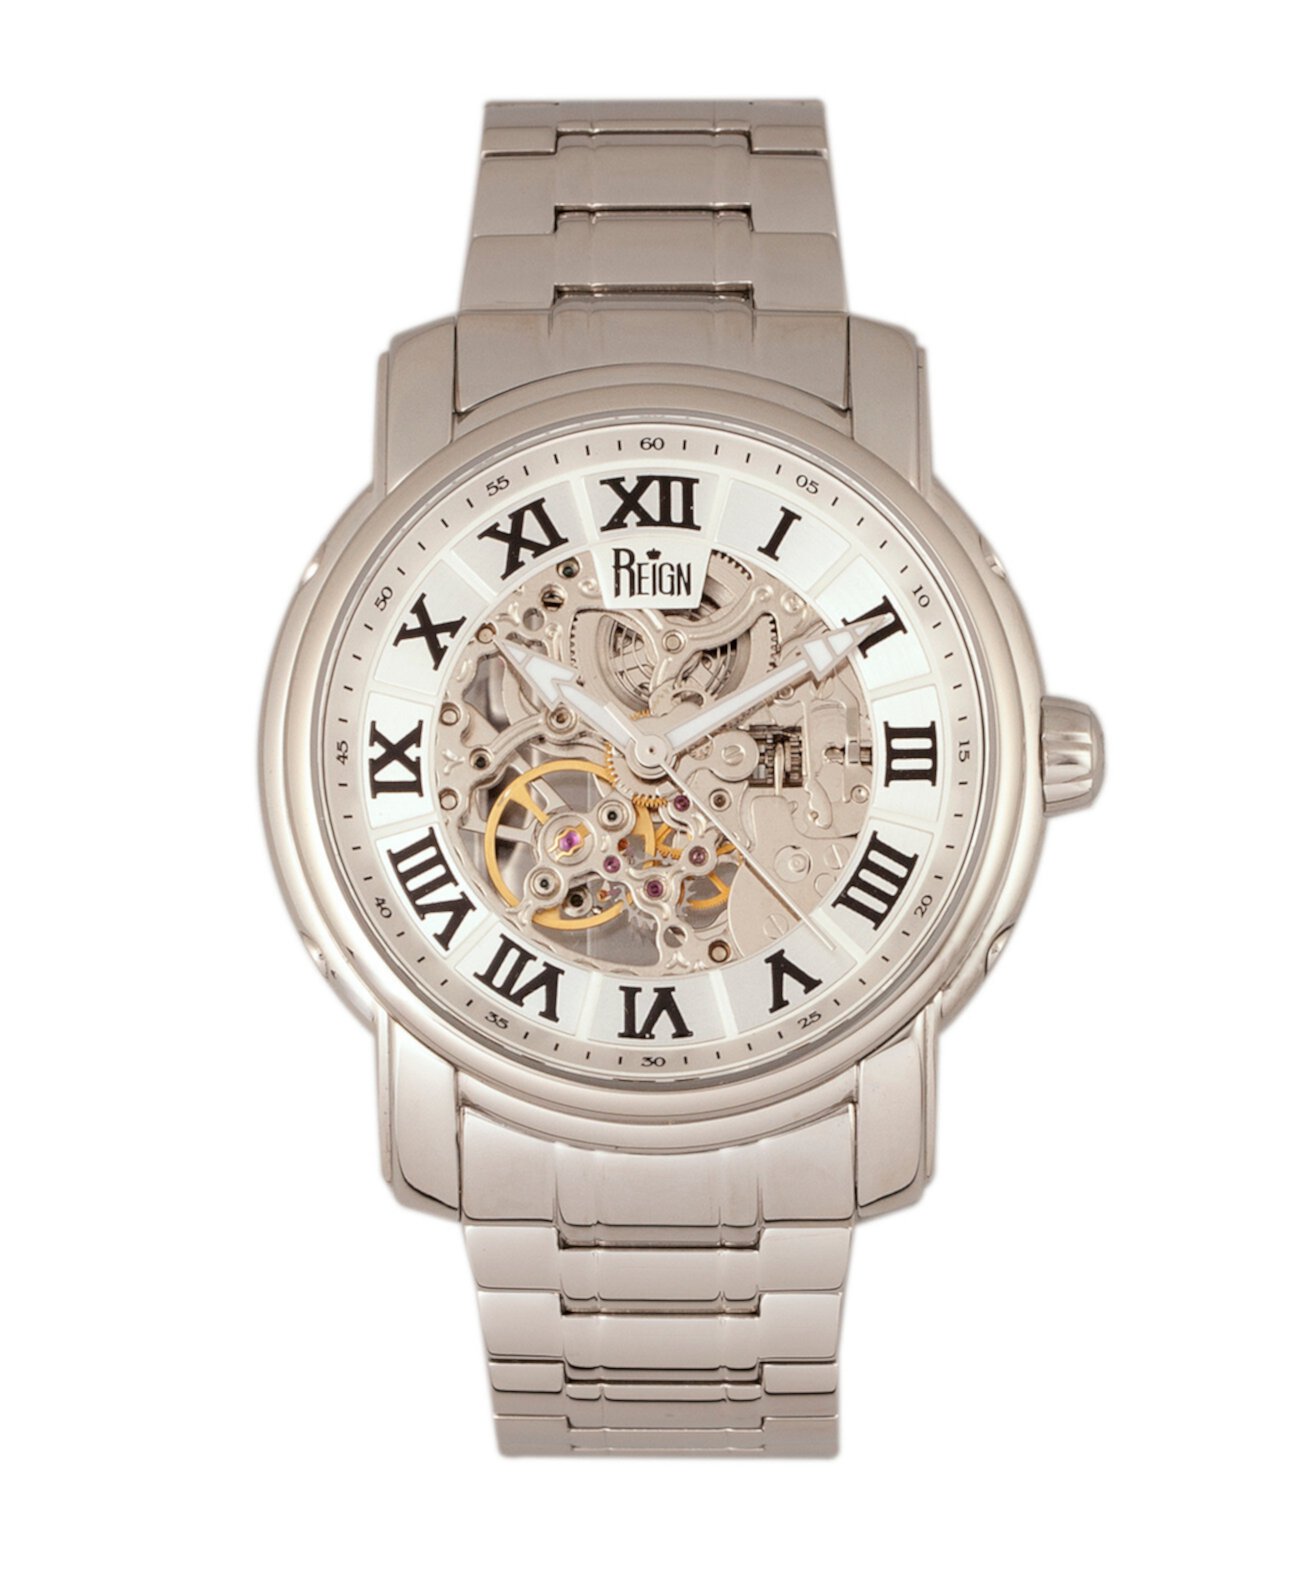 Kahn Automatic белый циферблат, часы Skeleton Silver из нержавеющей стали 45 мм Reign